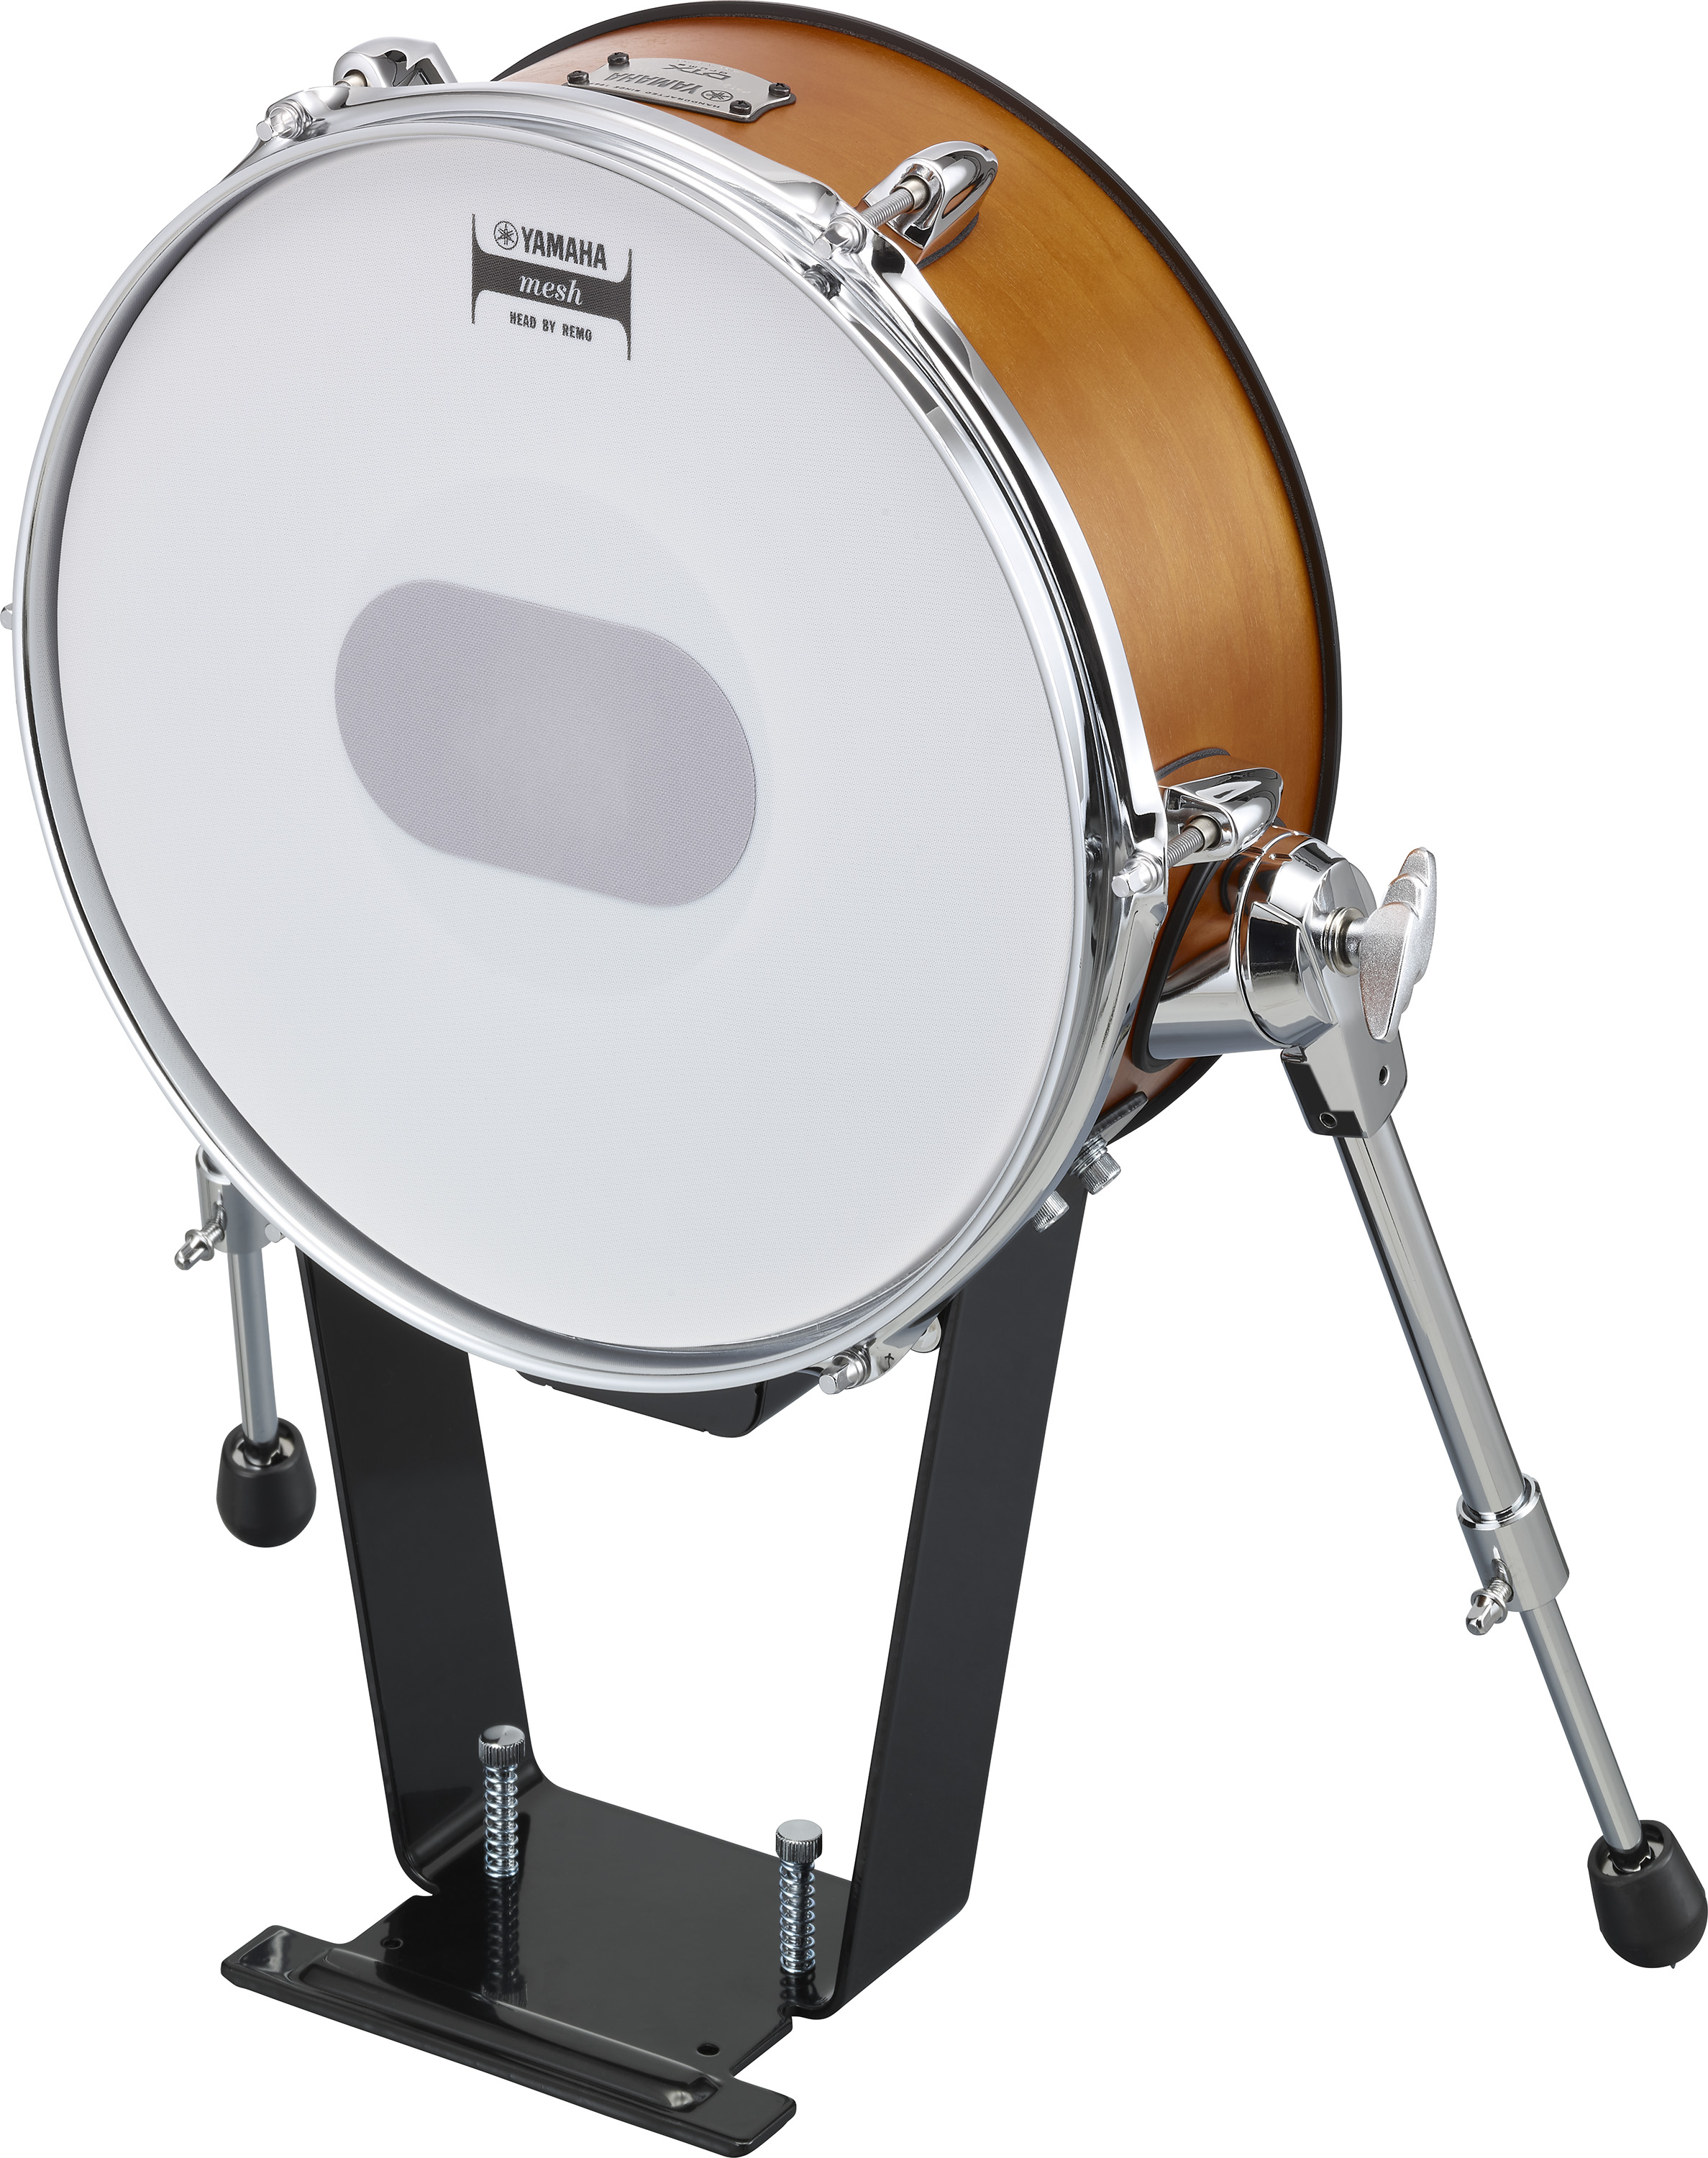 Yamaha Dtx10-kx Electronic Drum Kit Real Wood - Elektronisch drumstel - Variation 4